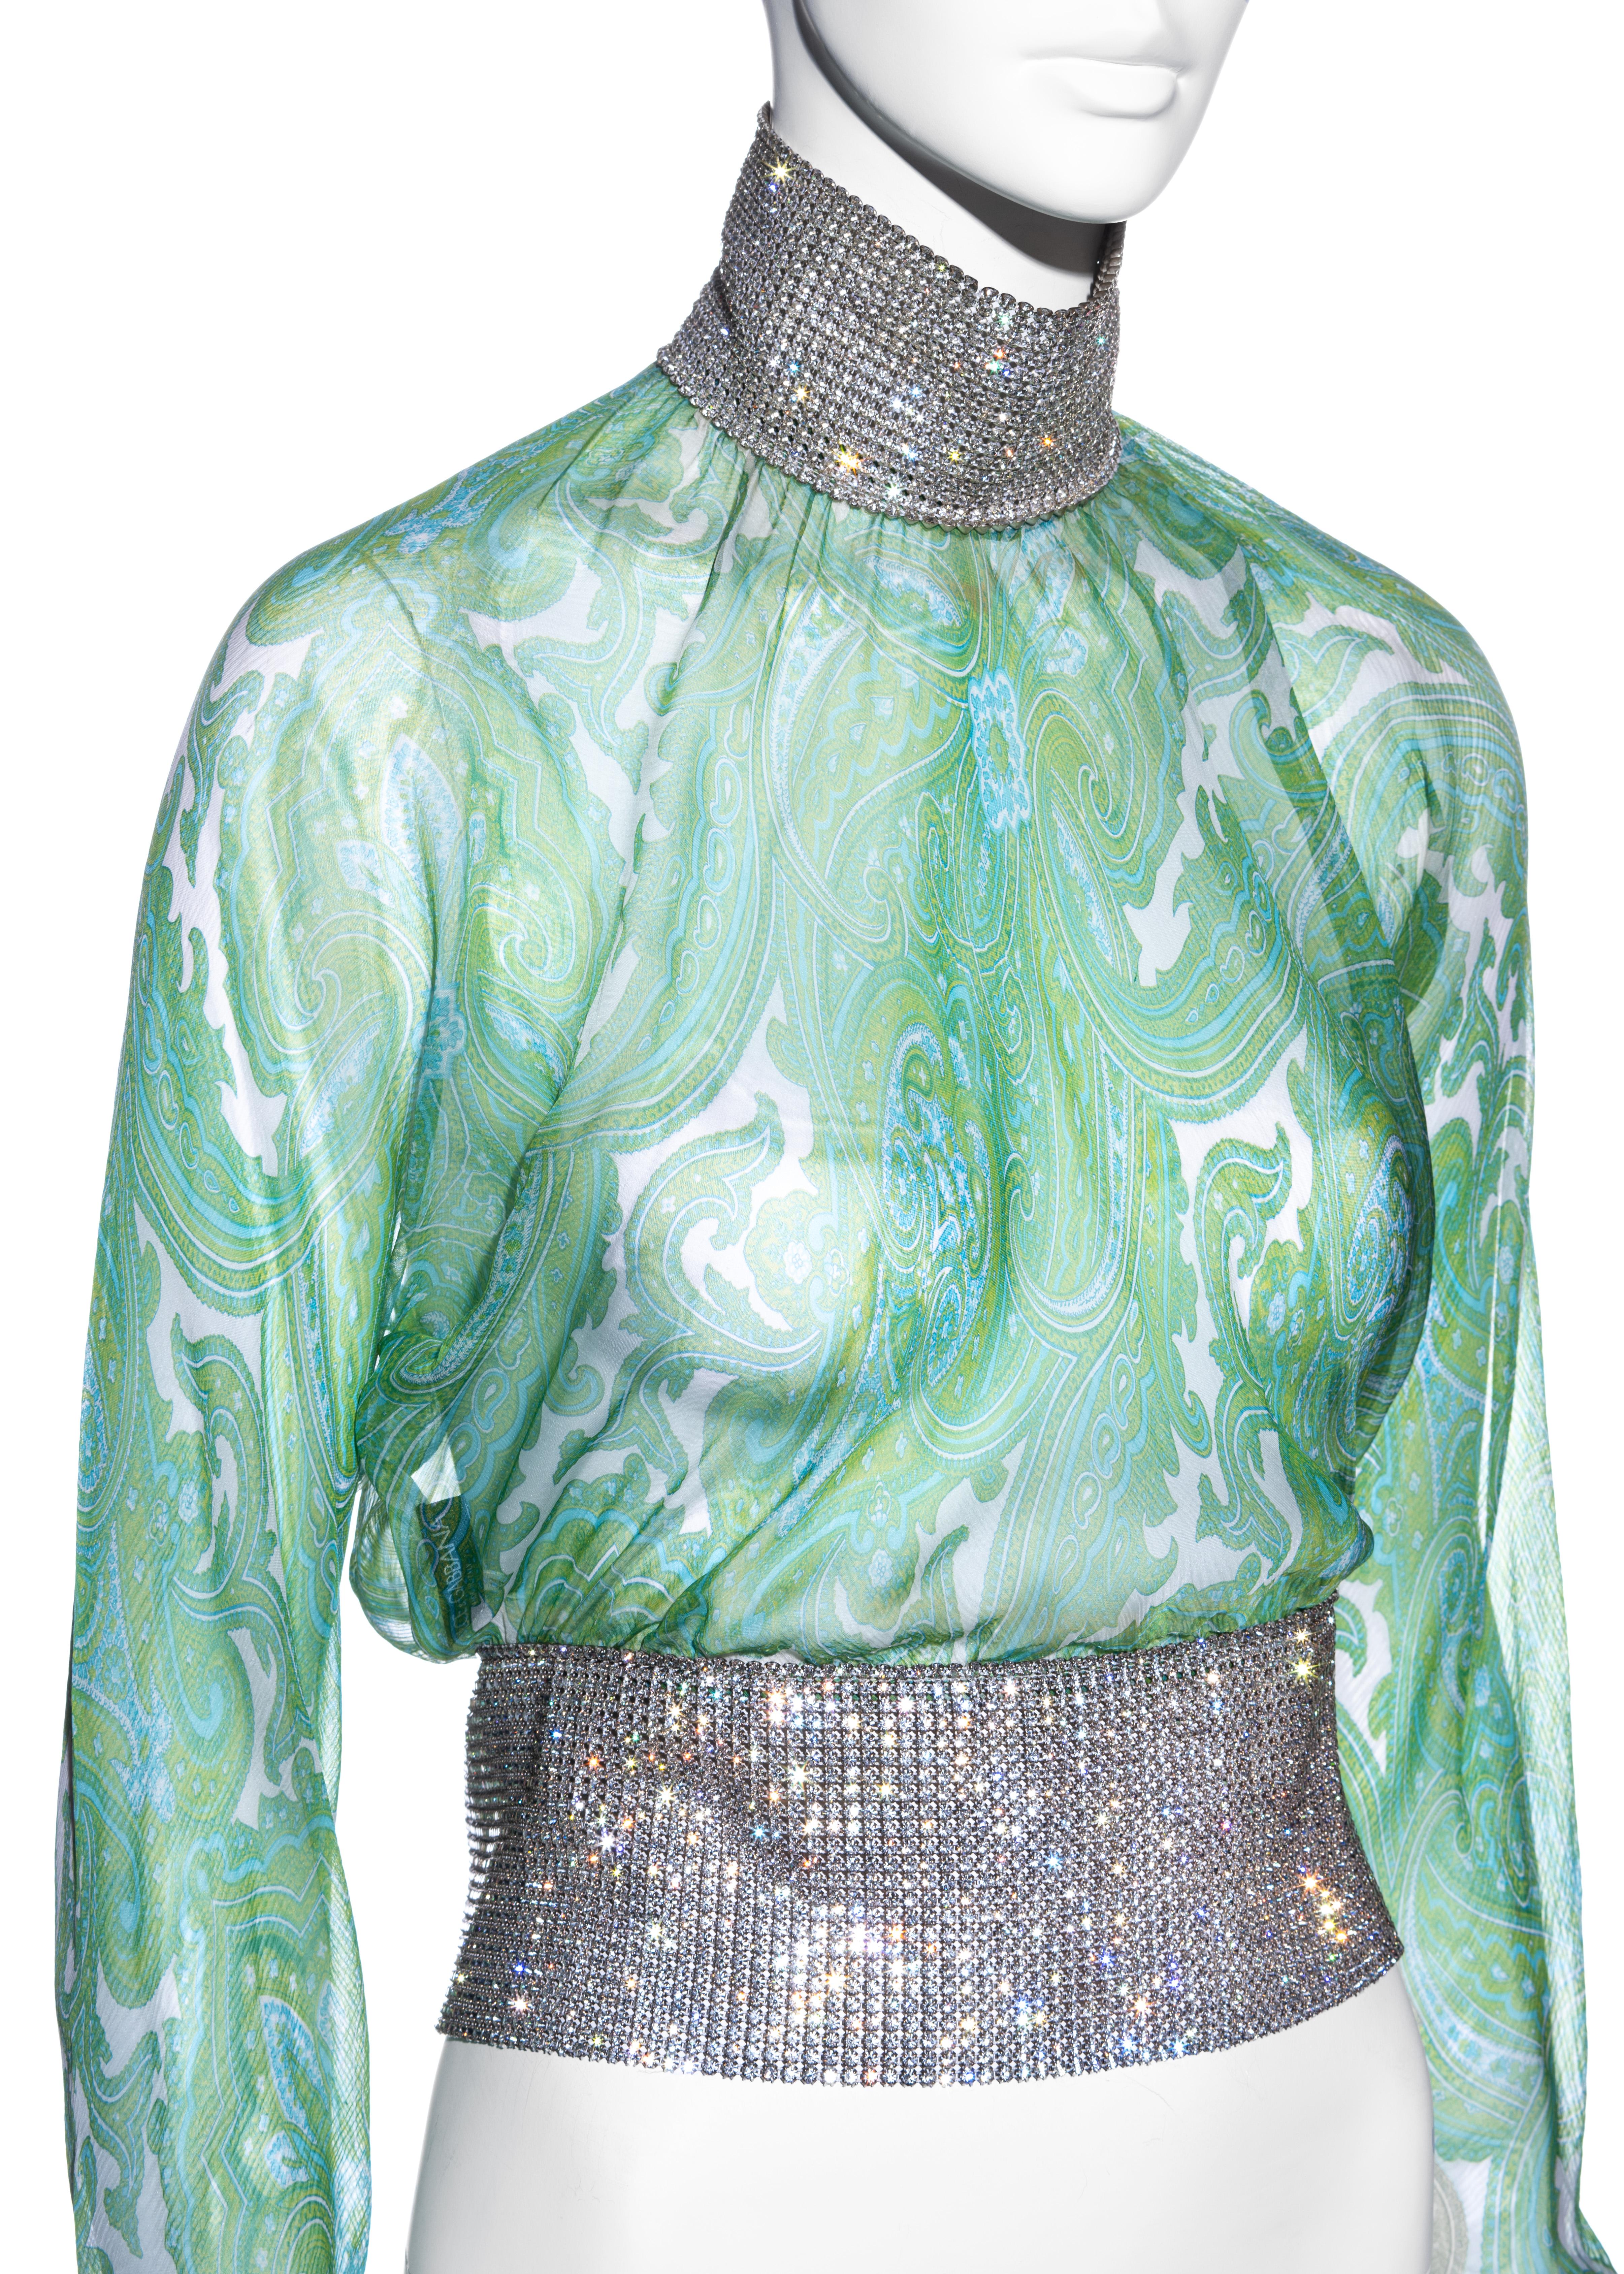 Women's Dolce & Gabbana green paisley silk blouse with rhinestone mesh, ss 2000